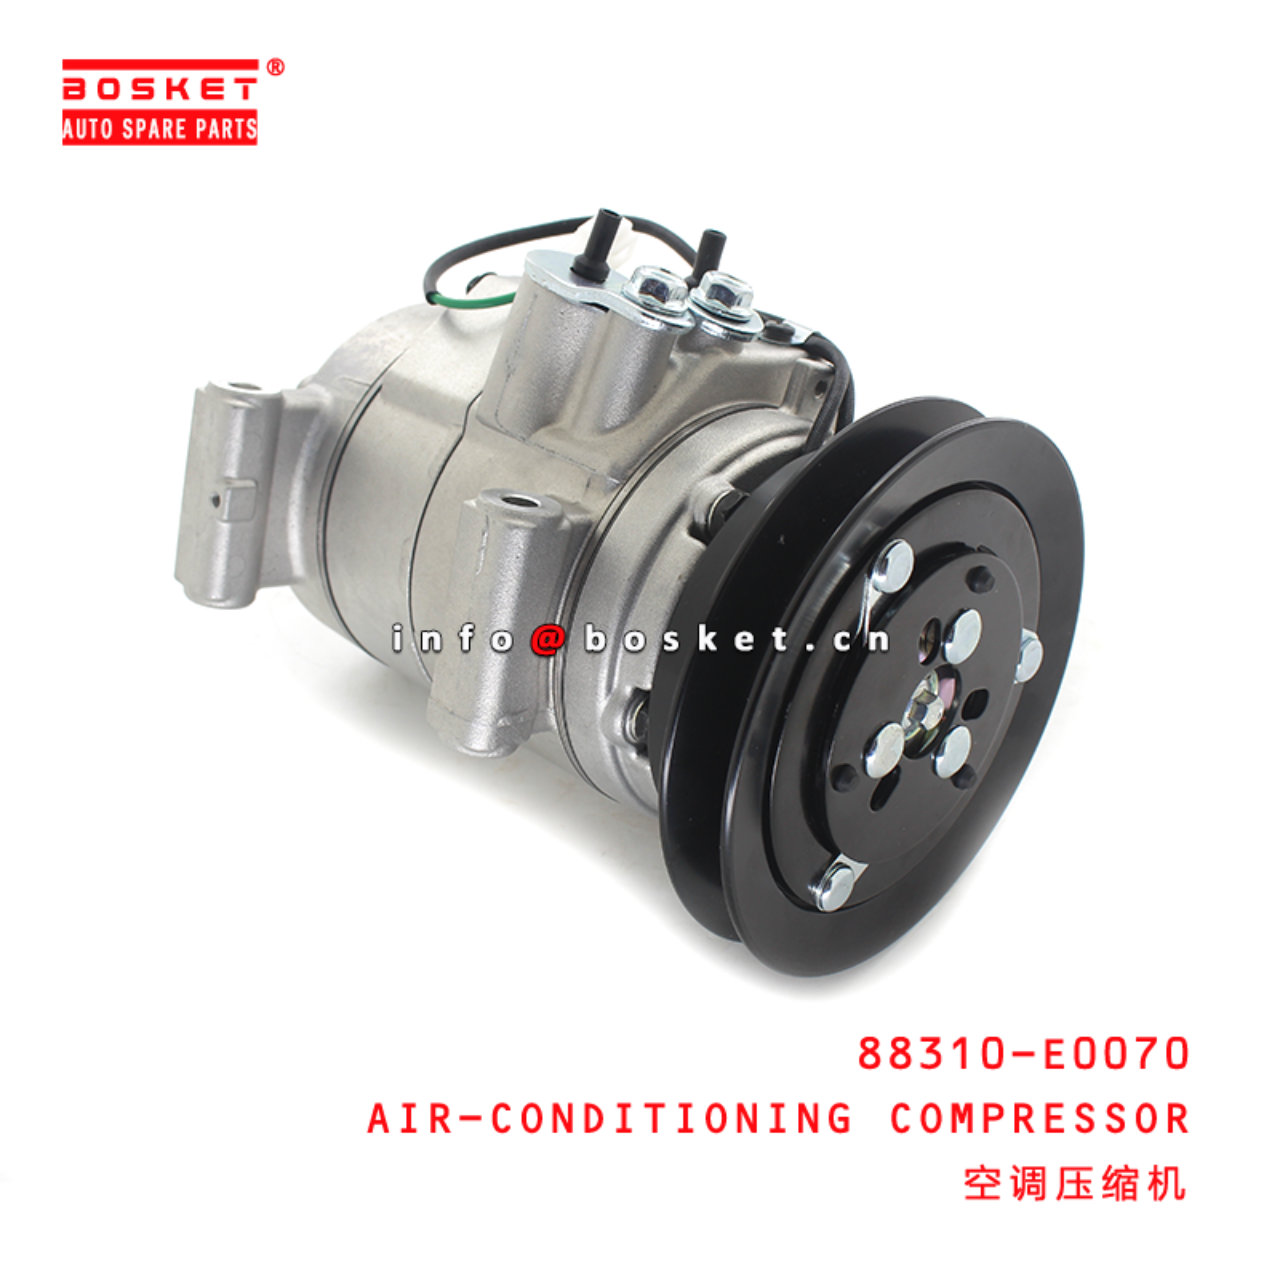 88310-E0070 Air-Conditioning Compressor Suitable for ISUZU HINO 500